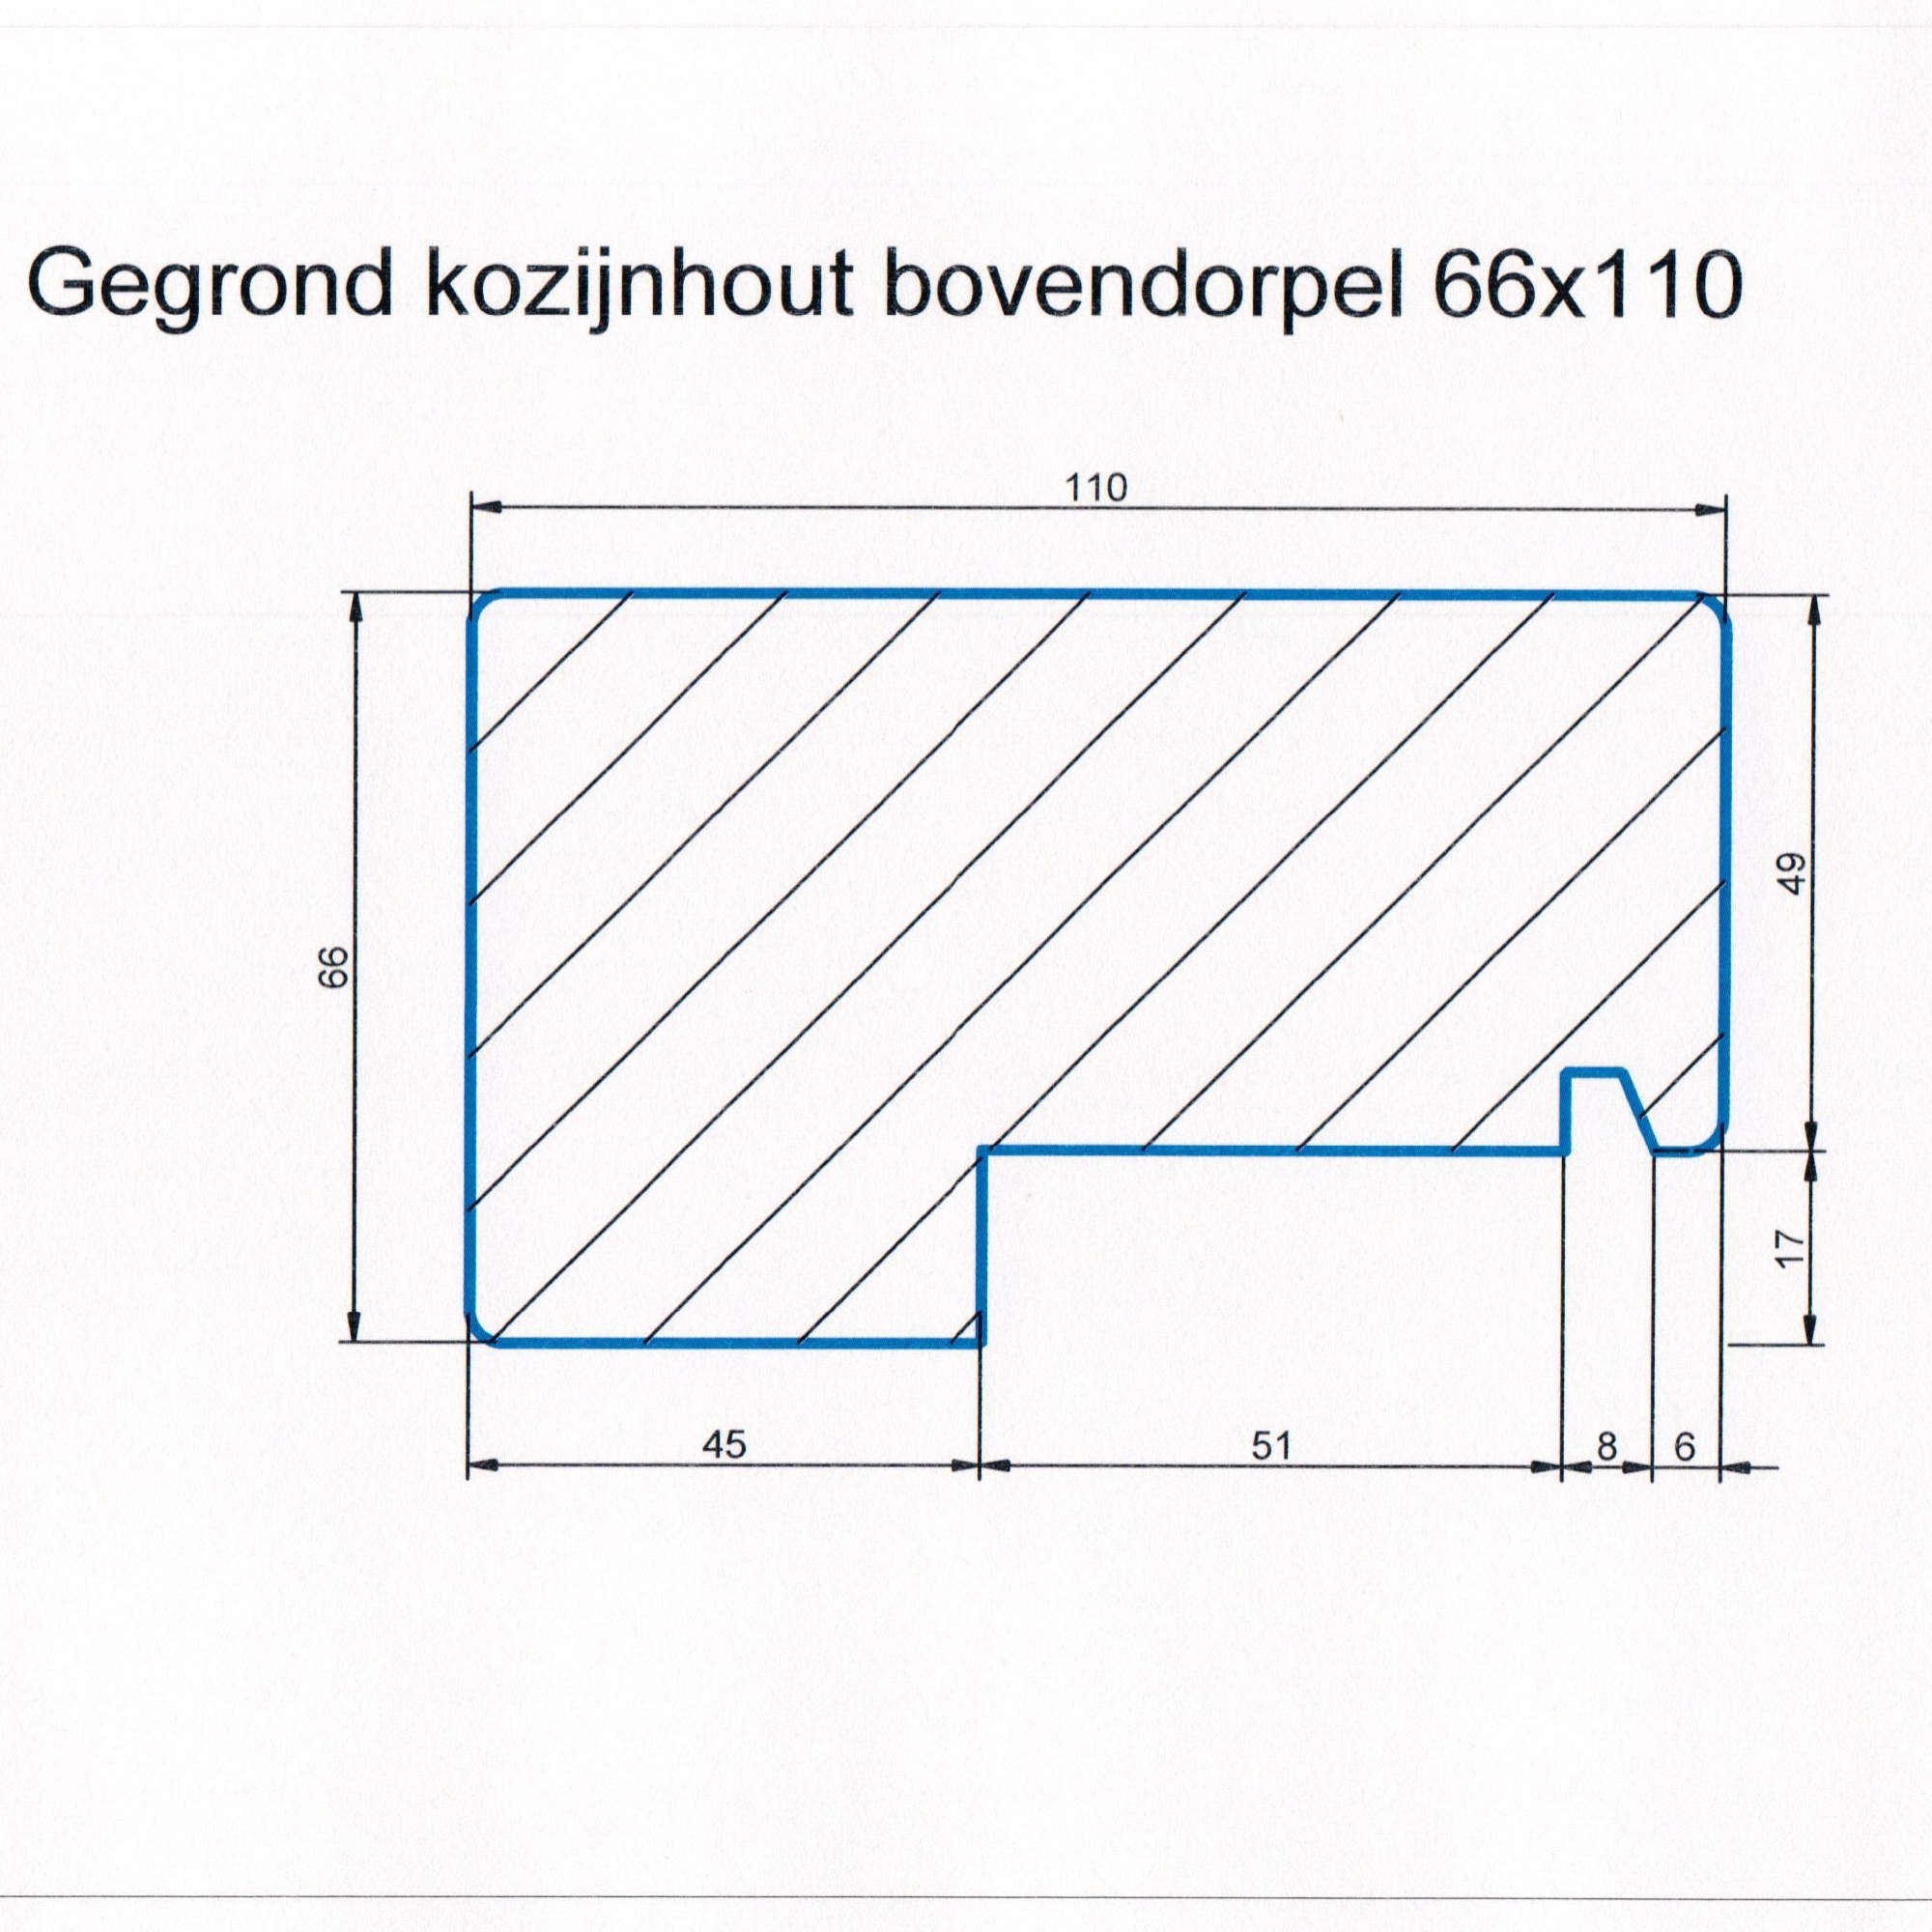 Hardhout 66x110 kozijnhout gegrond L=5900 bovendorpel